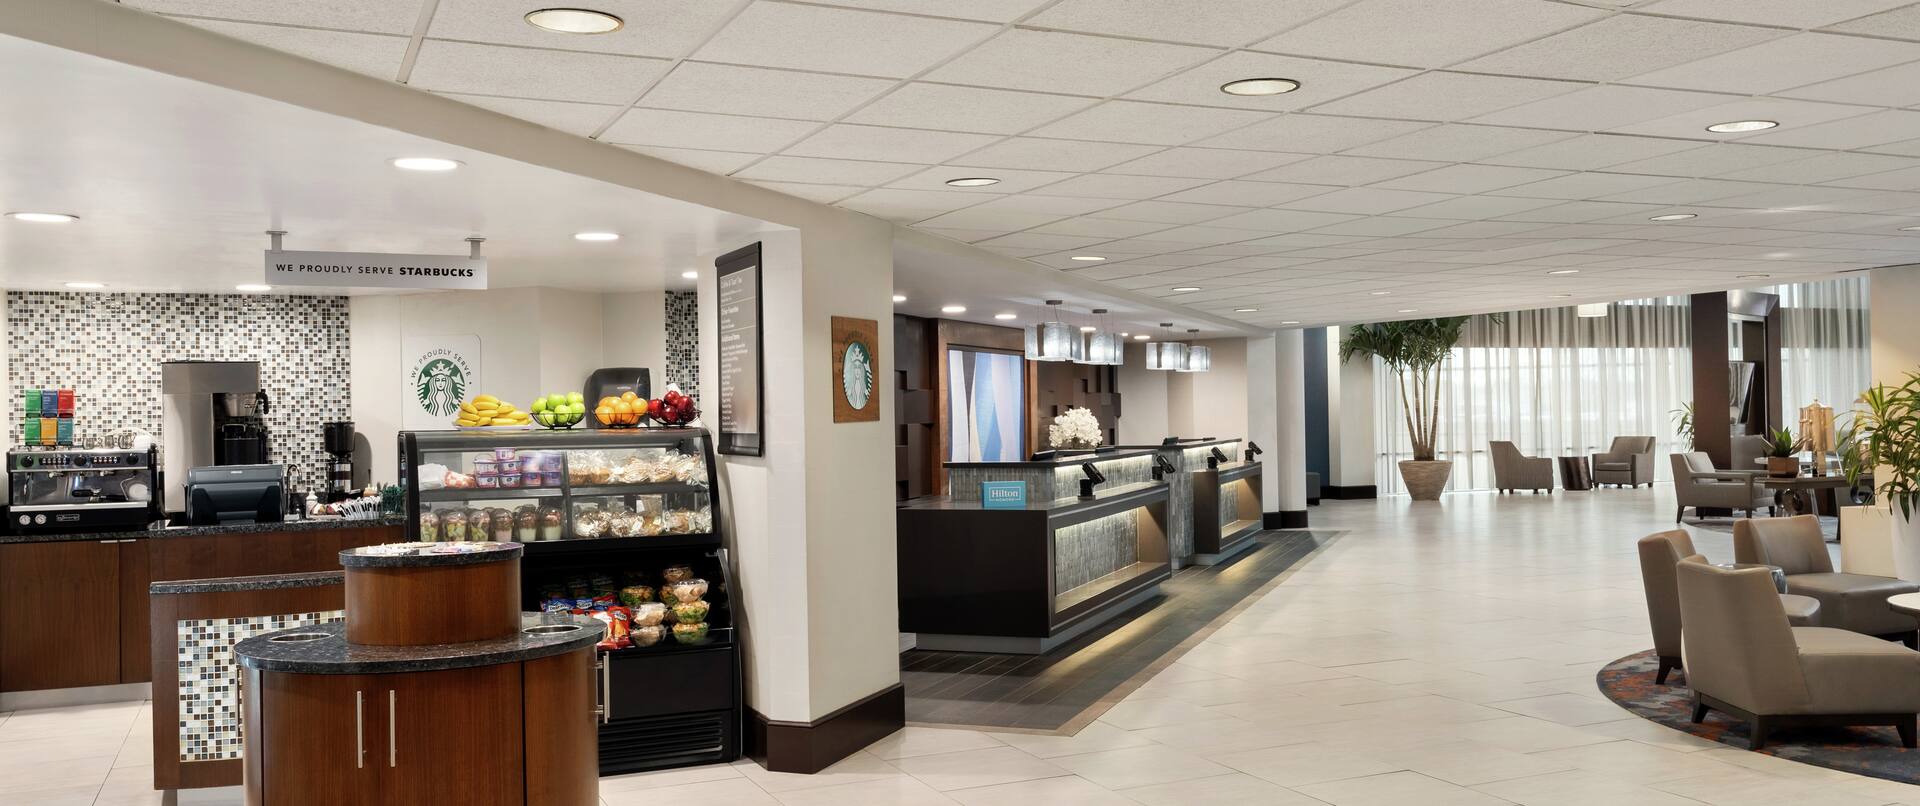 Hilton Hotel Lobby with Starbucks